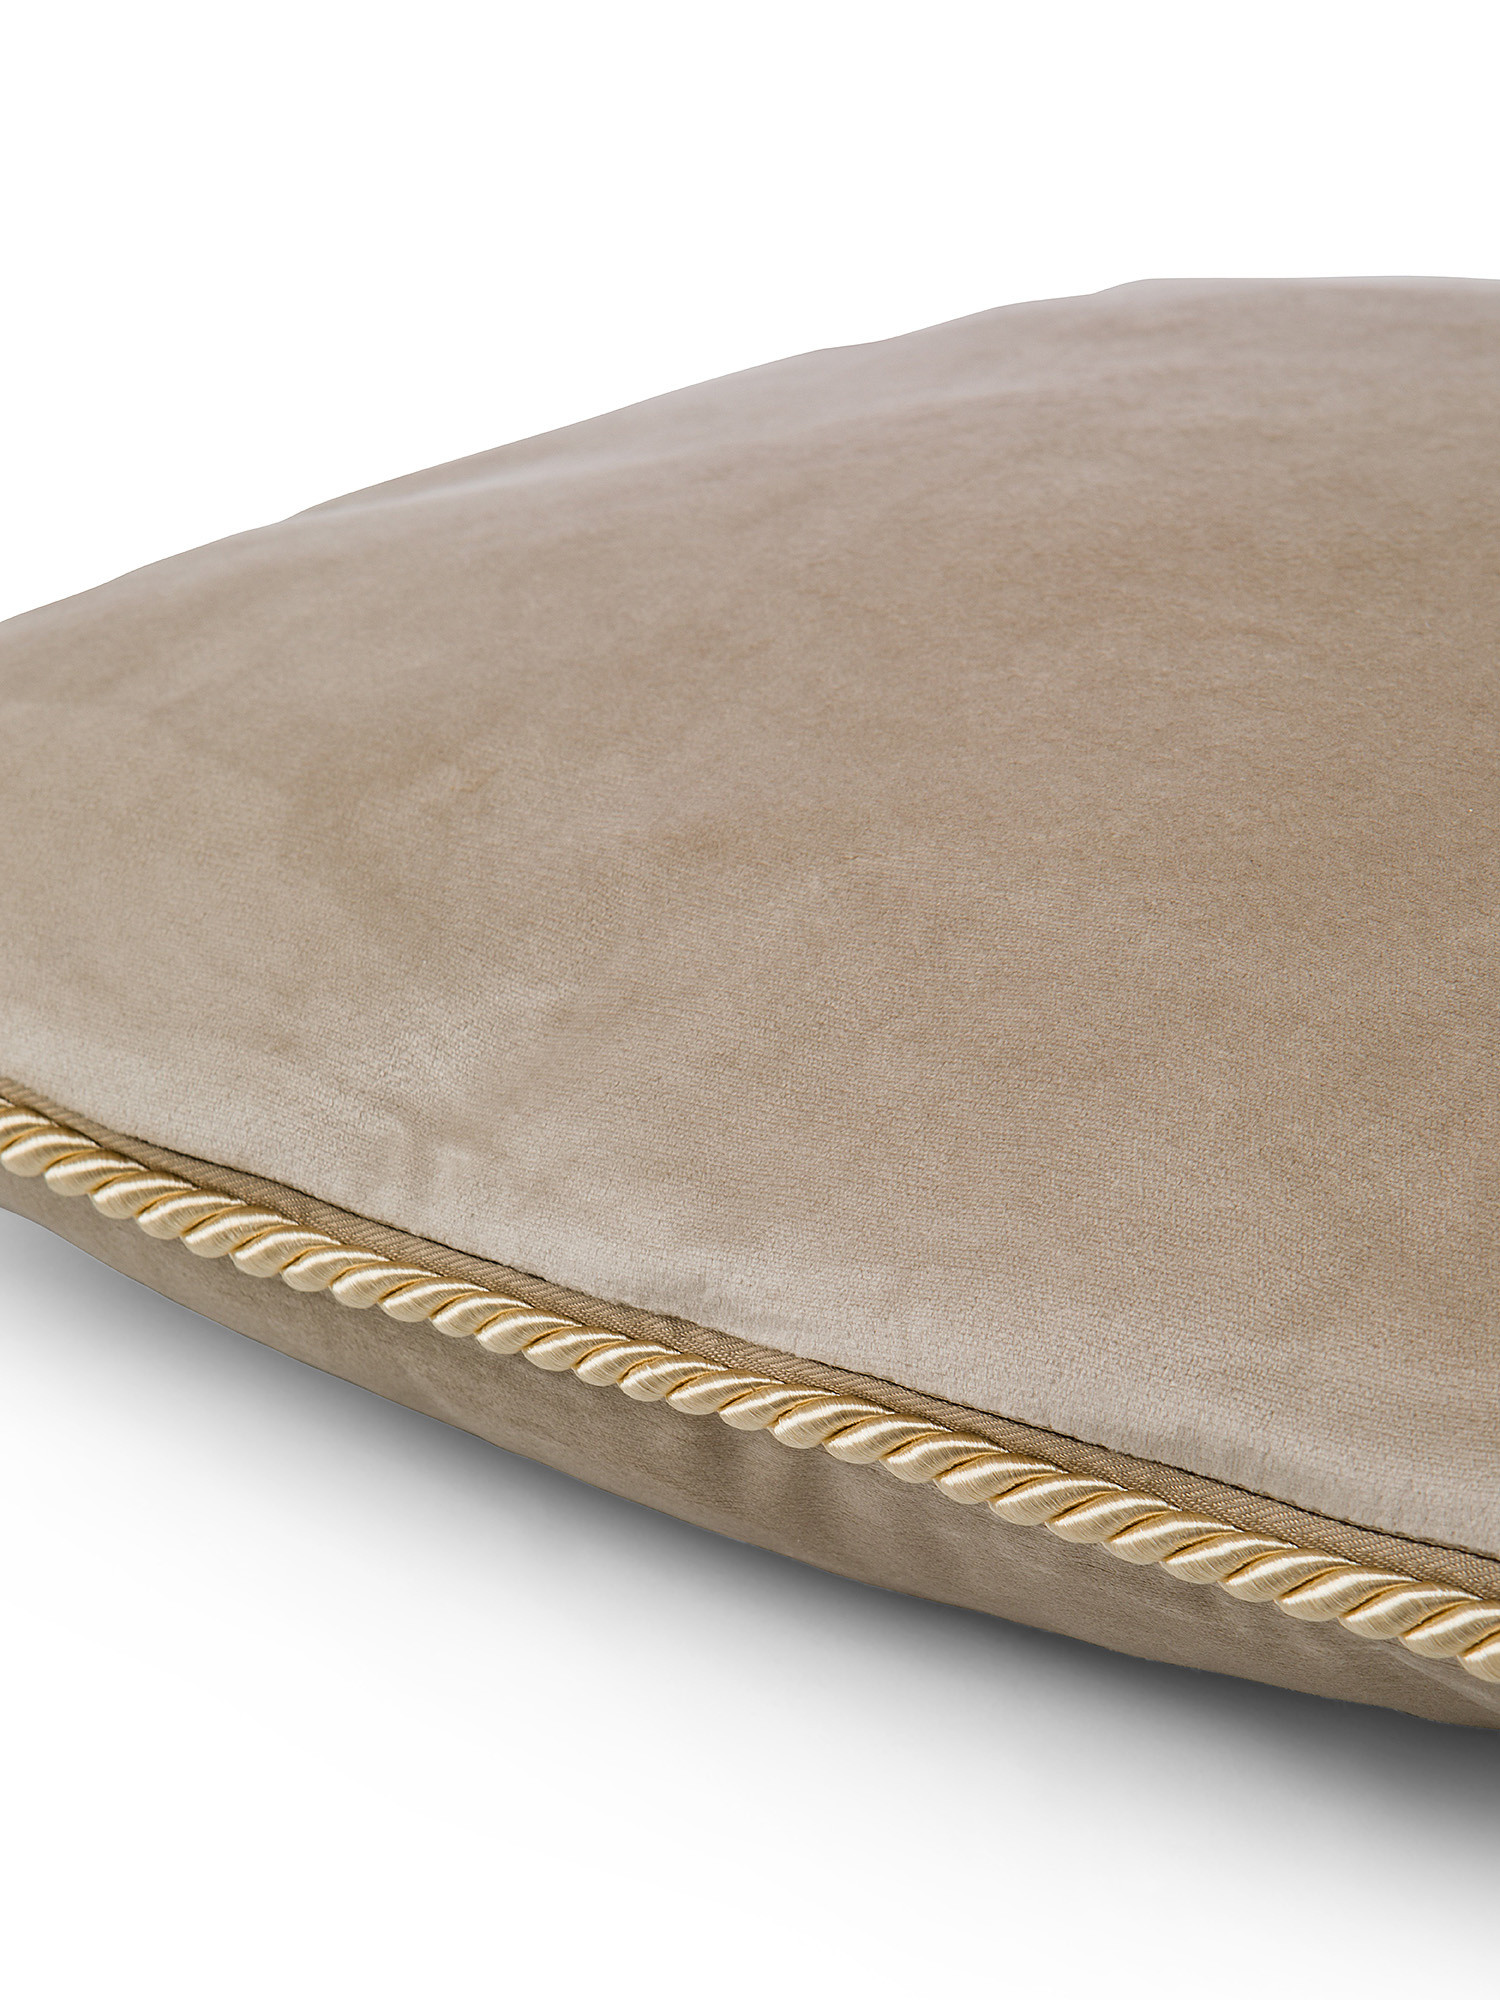 Velvet cushion 45x45cm, Beige, large image number 2